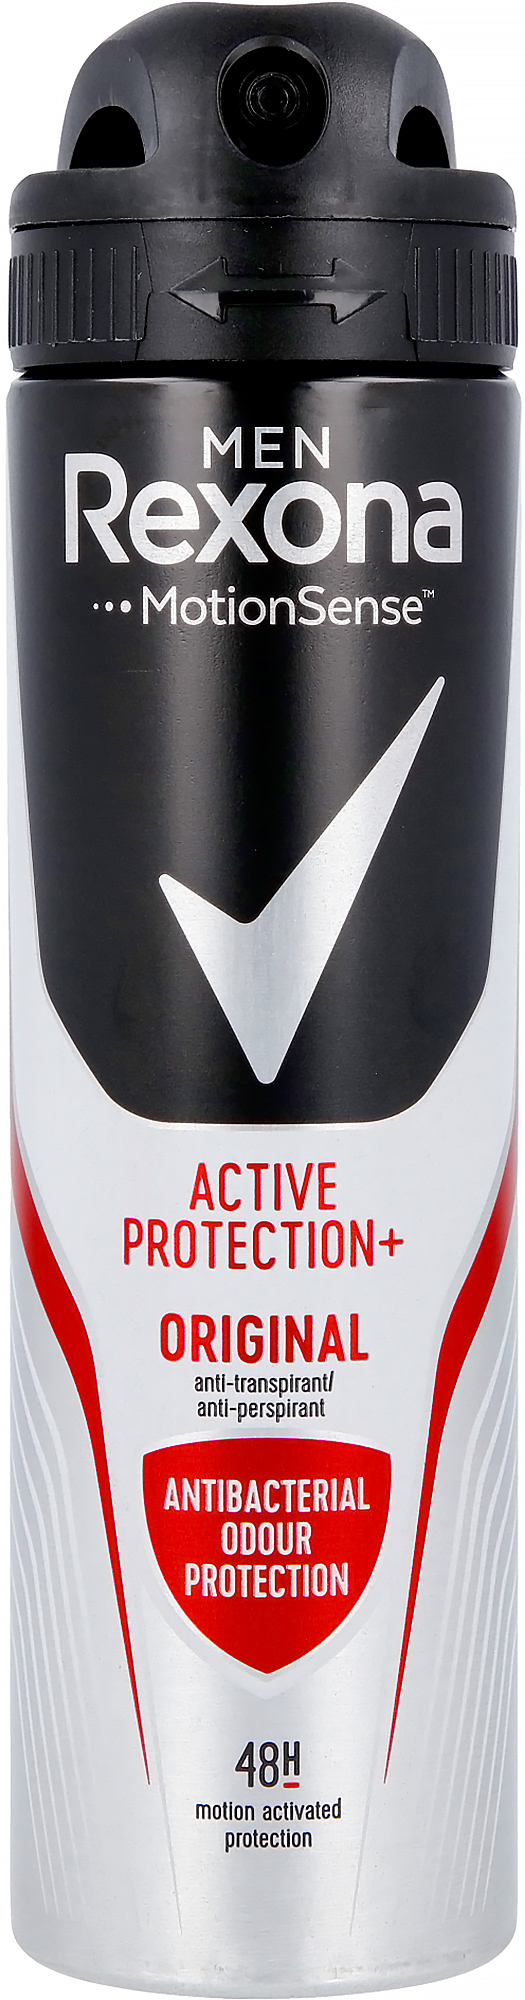 rexona active protection original